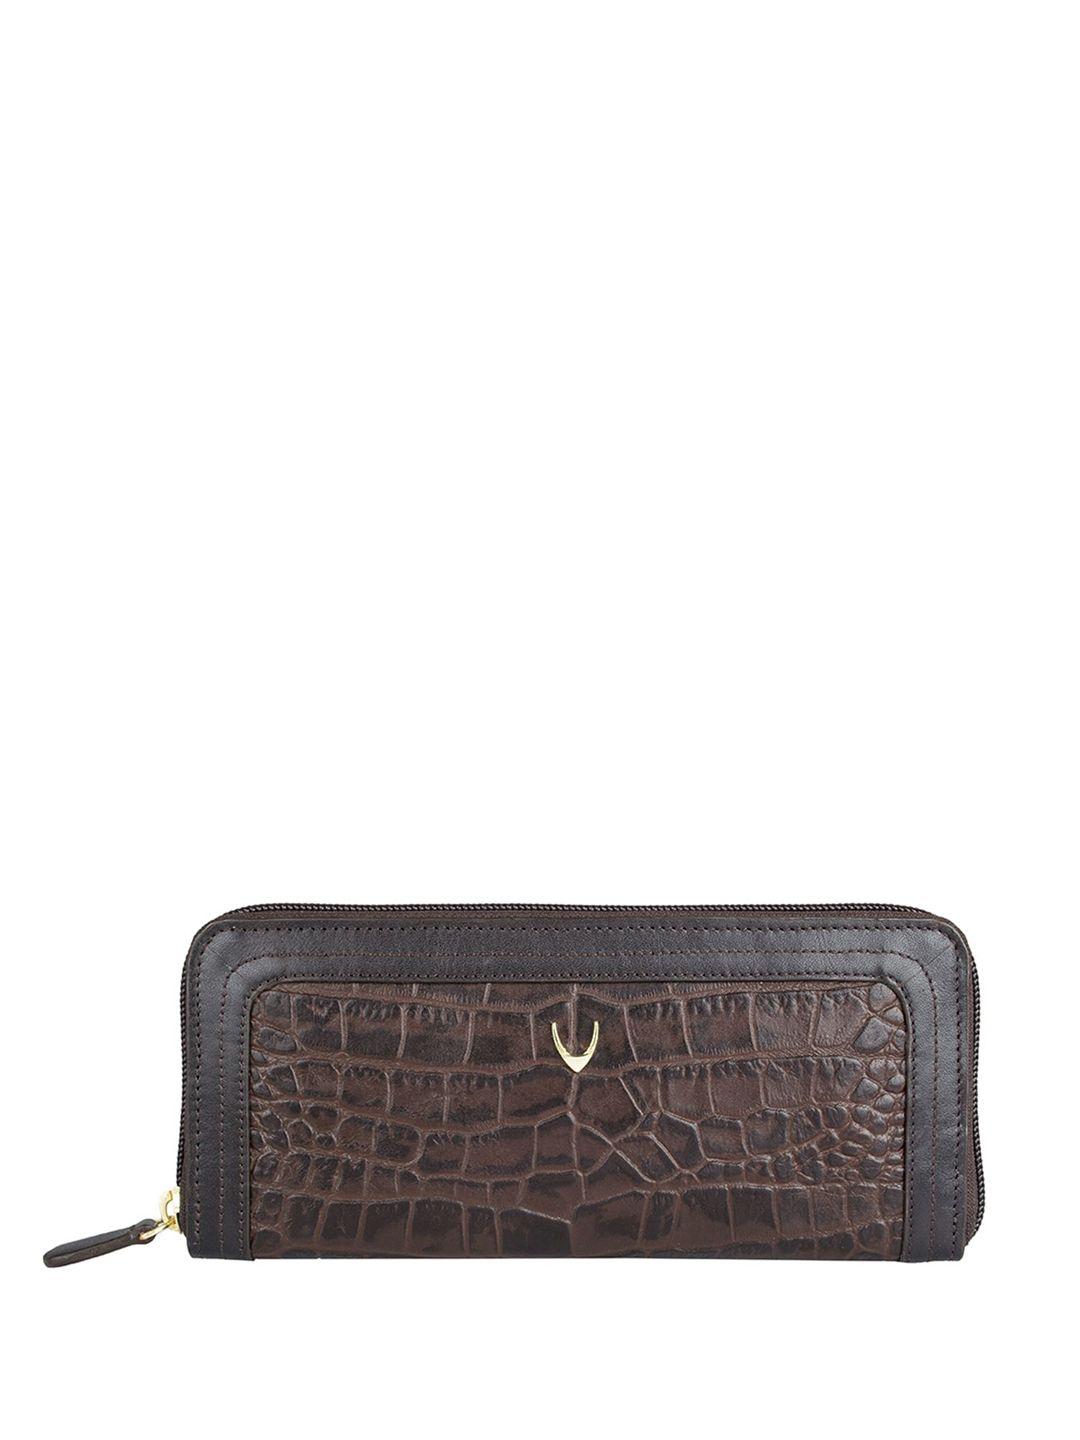 hidesign-textured-leather-purse